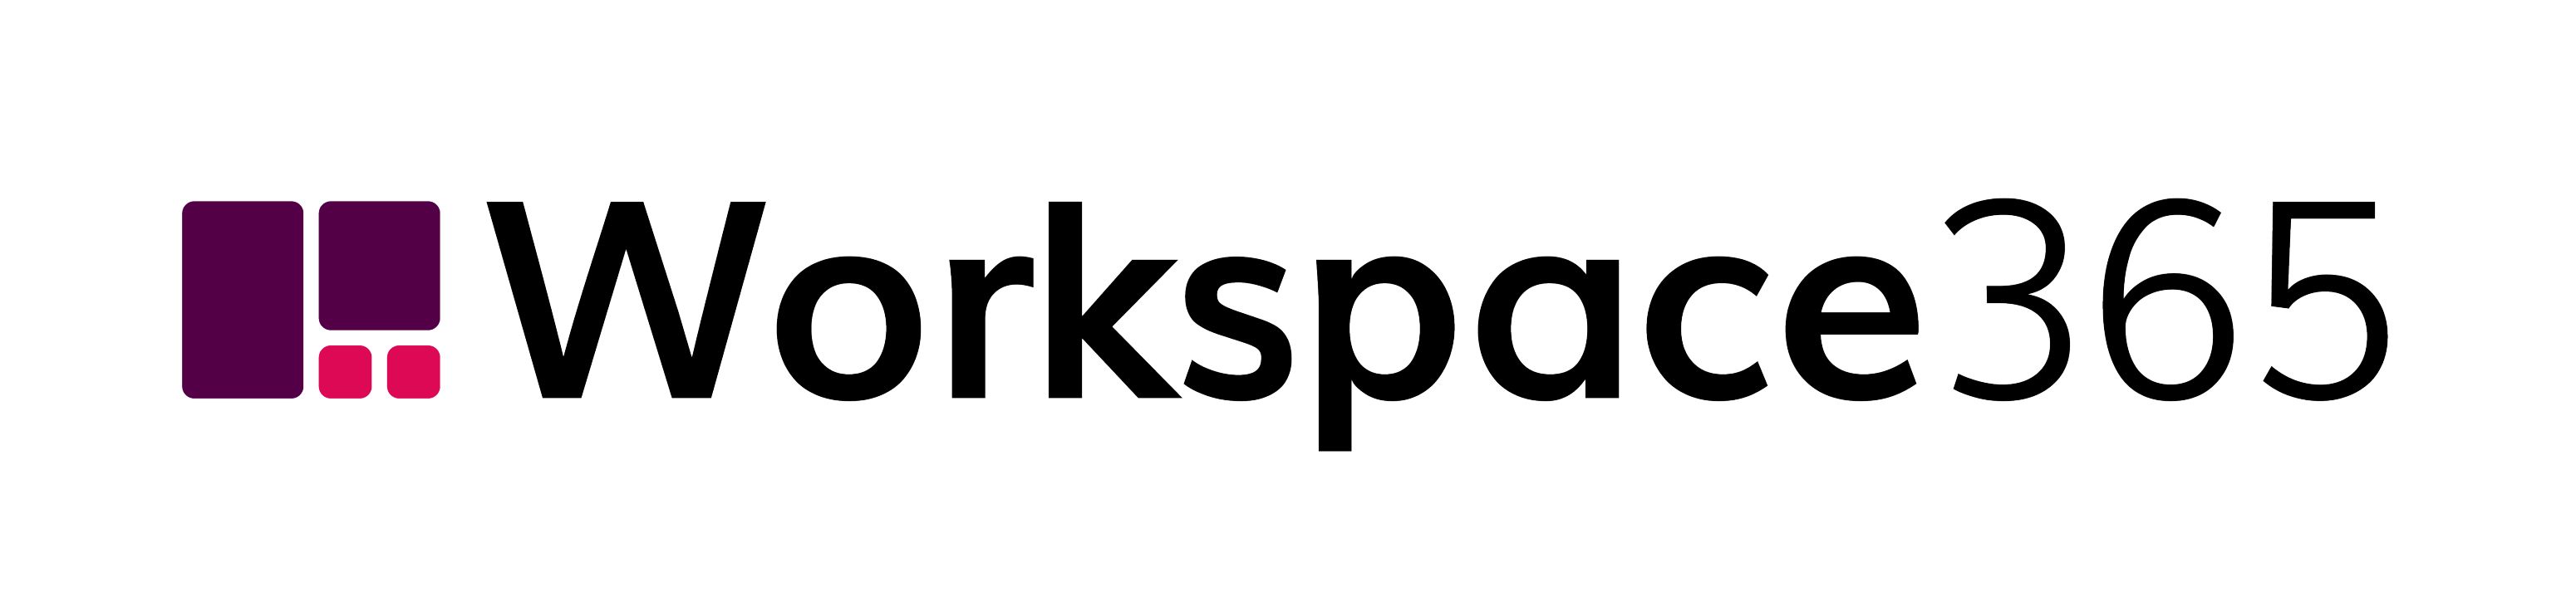 Workspace365 Logo@4x